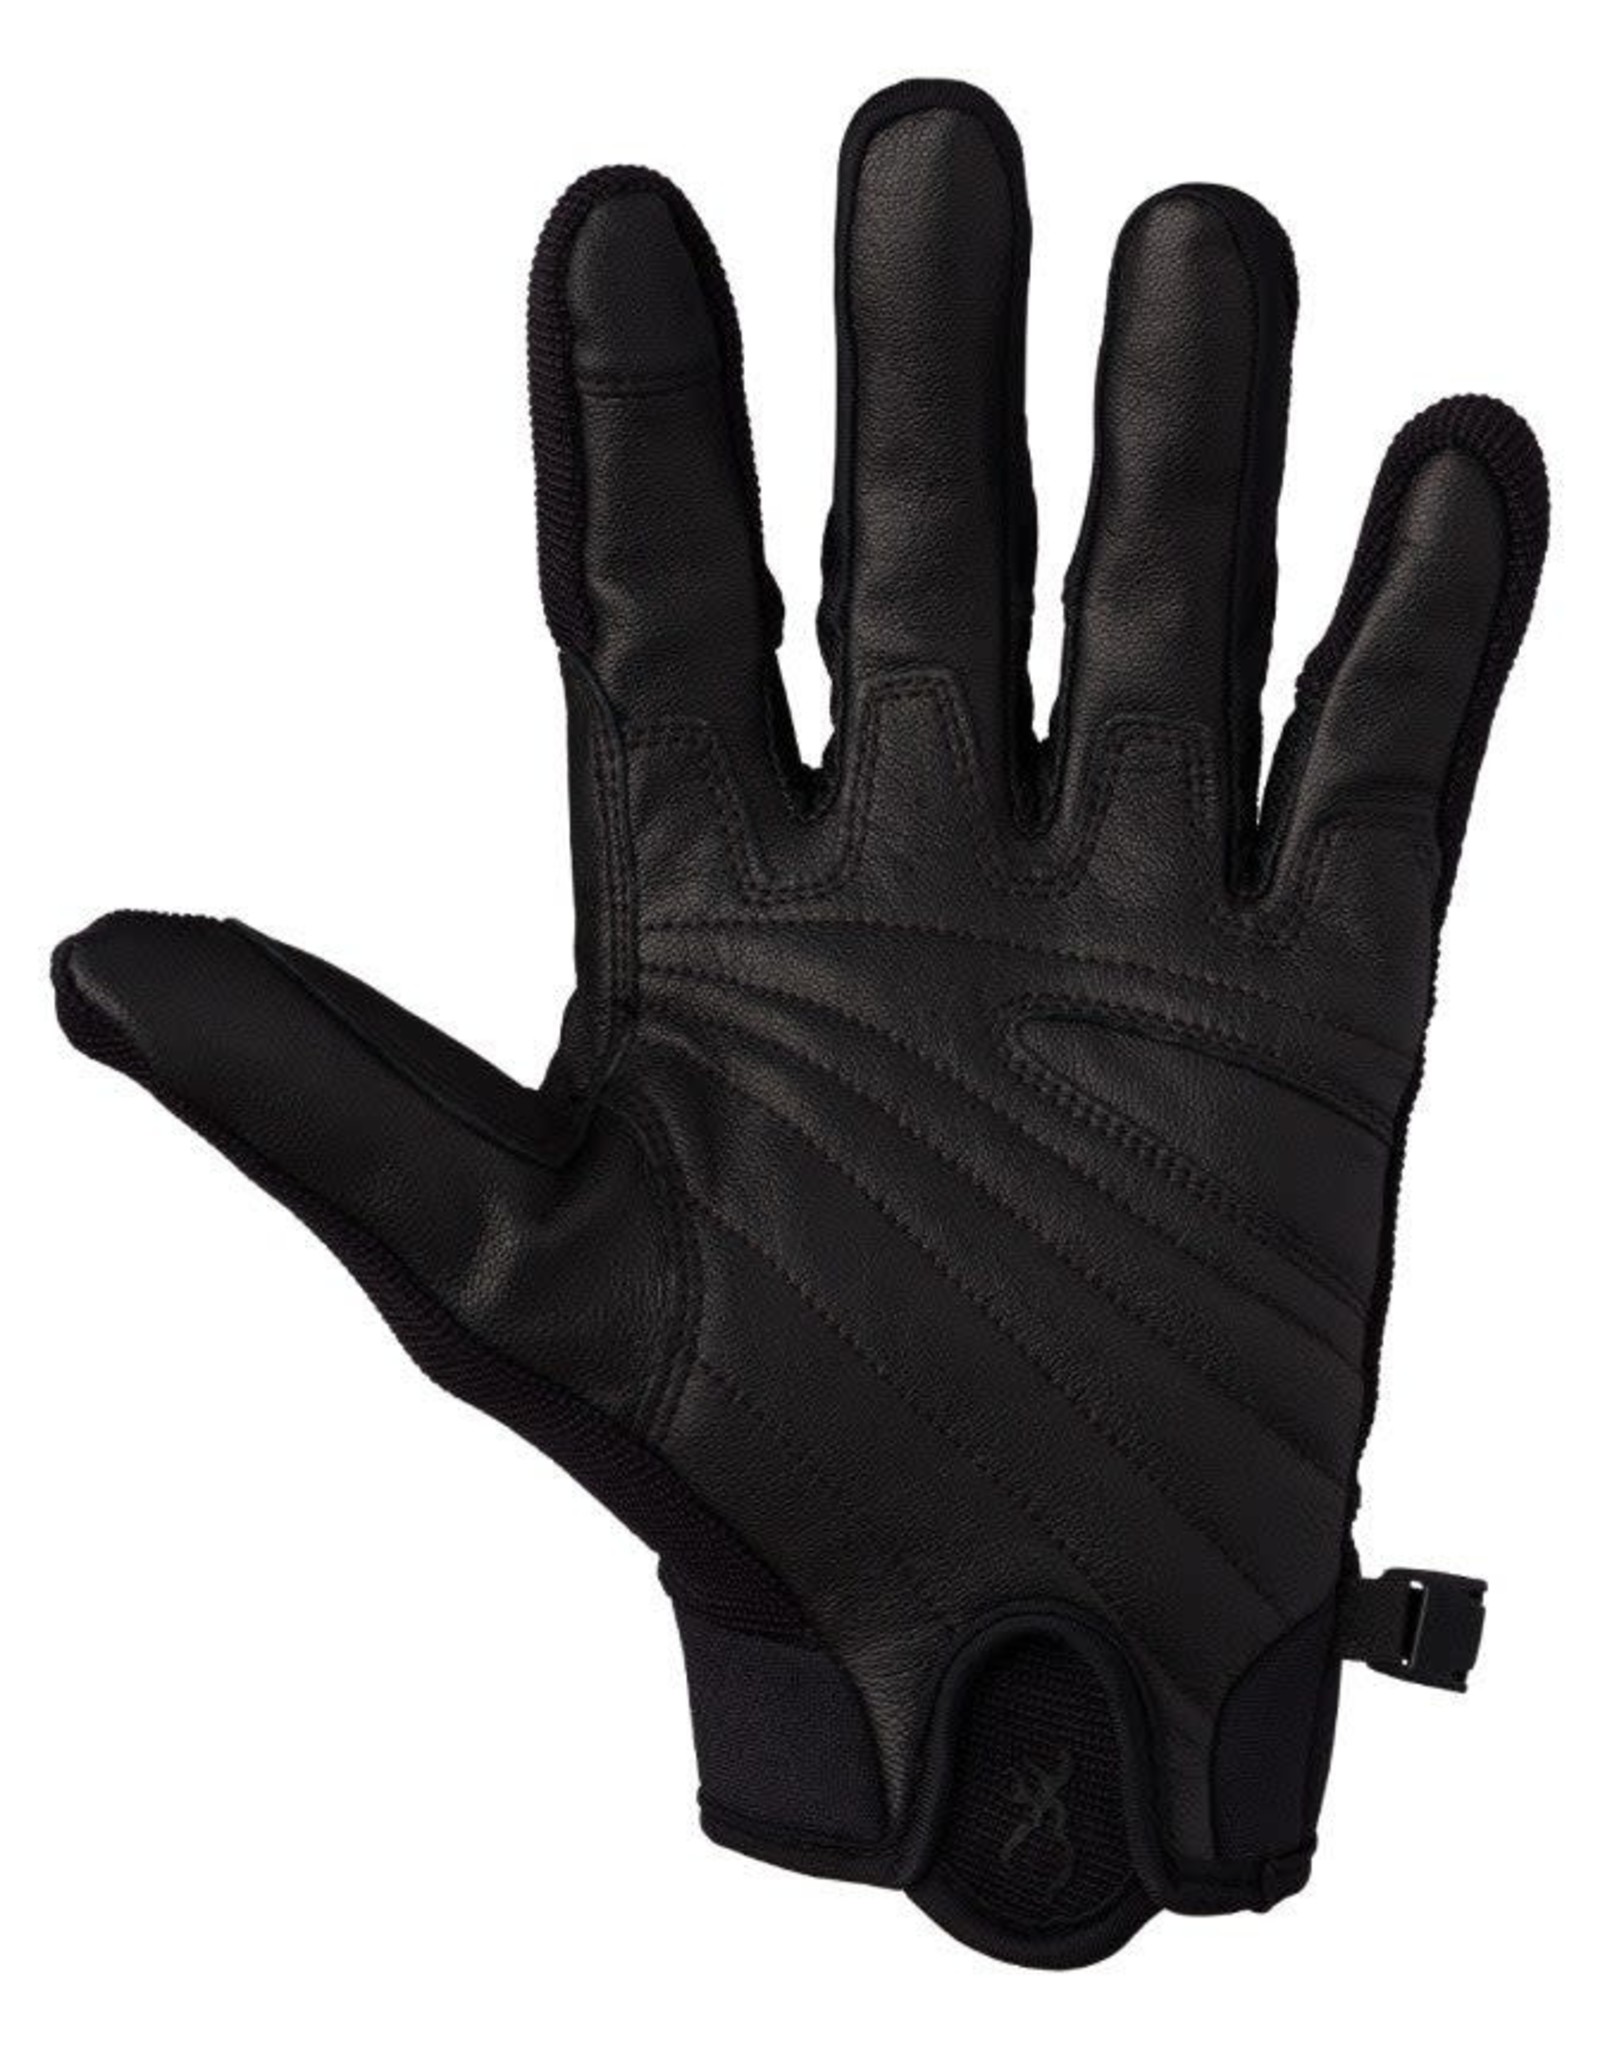 Browning Ace Shooting Glove - Black/Black - X-Large